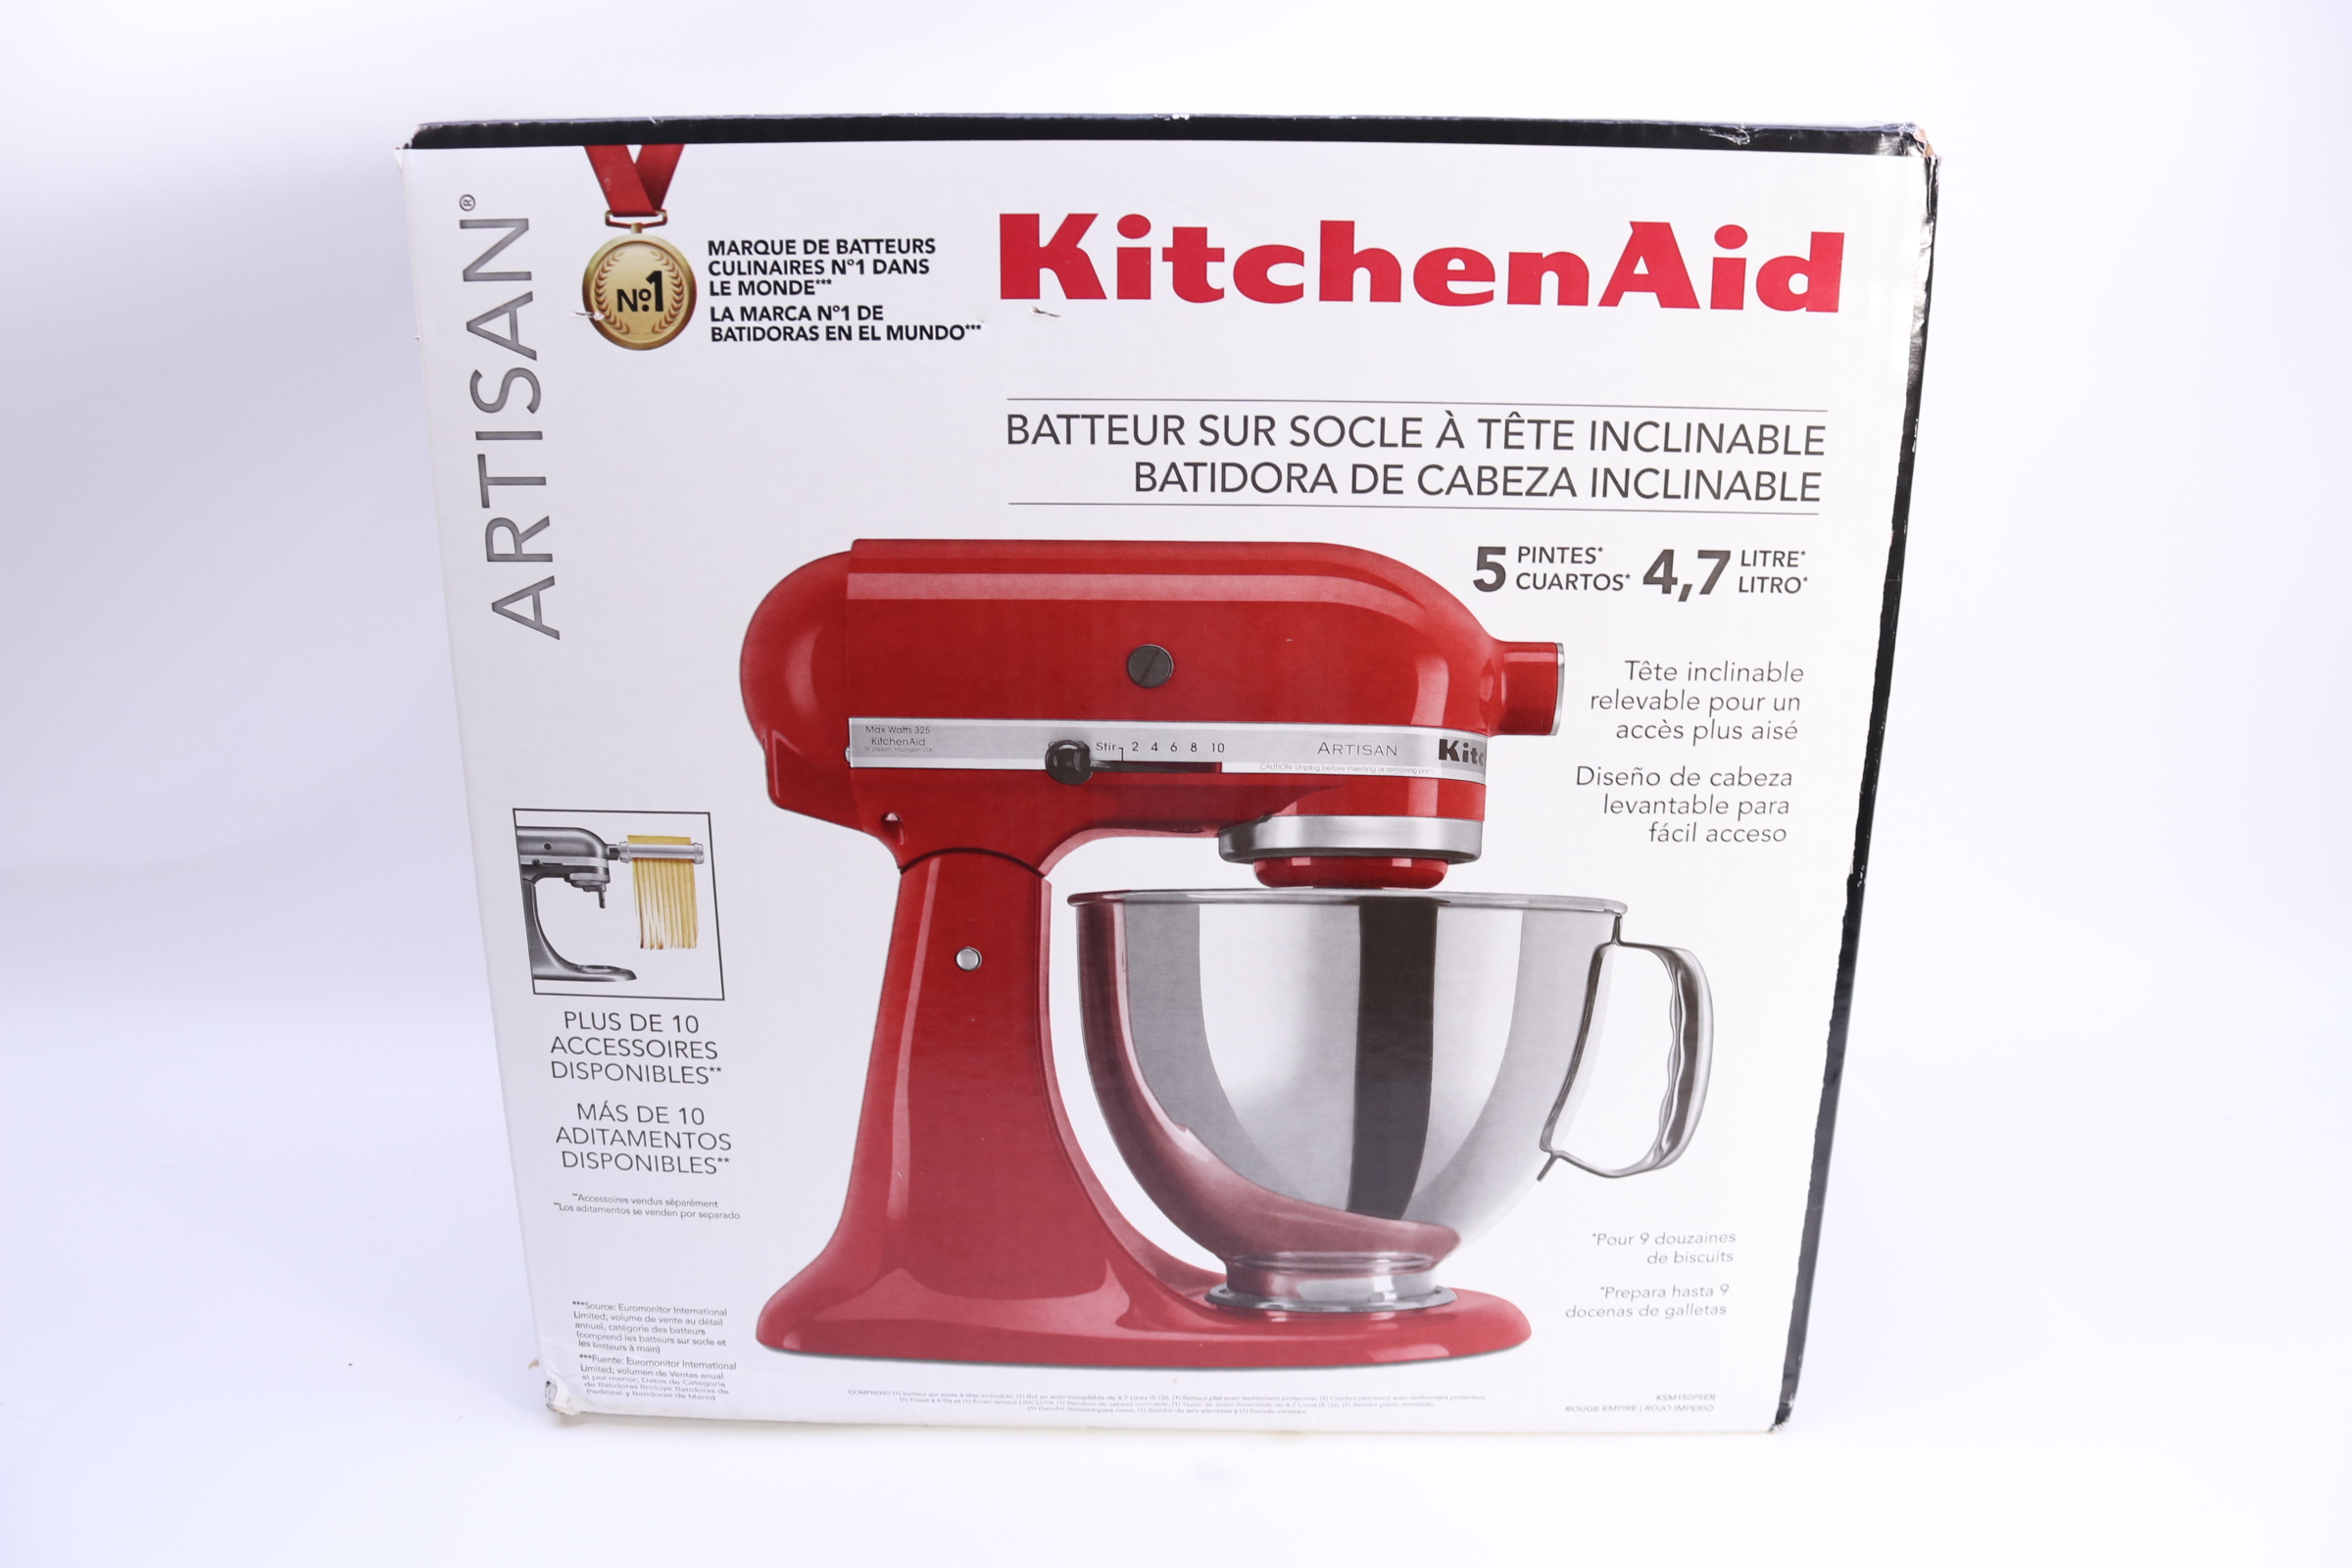 KitchenAid KSM150PSER Artisan Tilt-Head Stand Mixer with Pouring Shield,  5-Quart, Empire Red